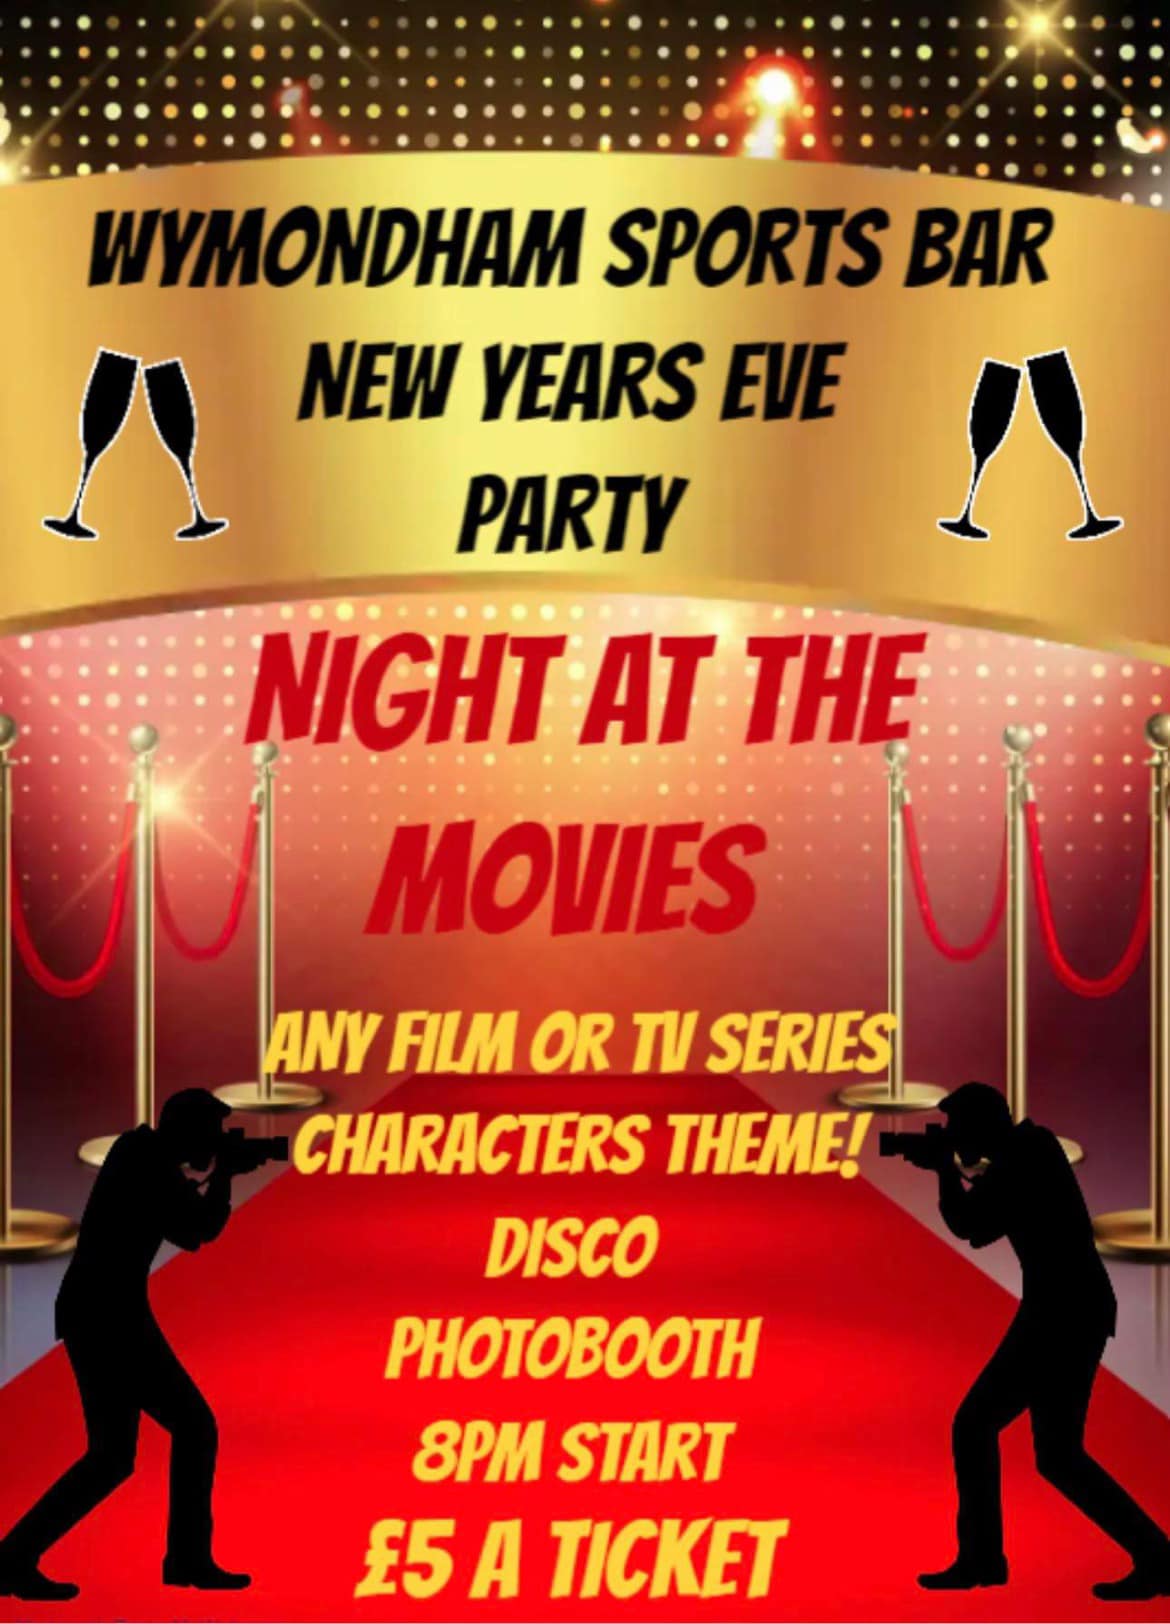 New Years Eve Party – Wymondham Sports Bar, 31st December